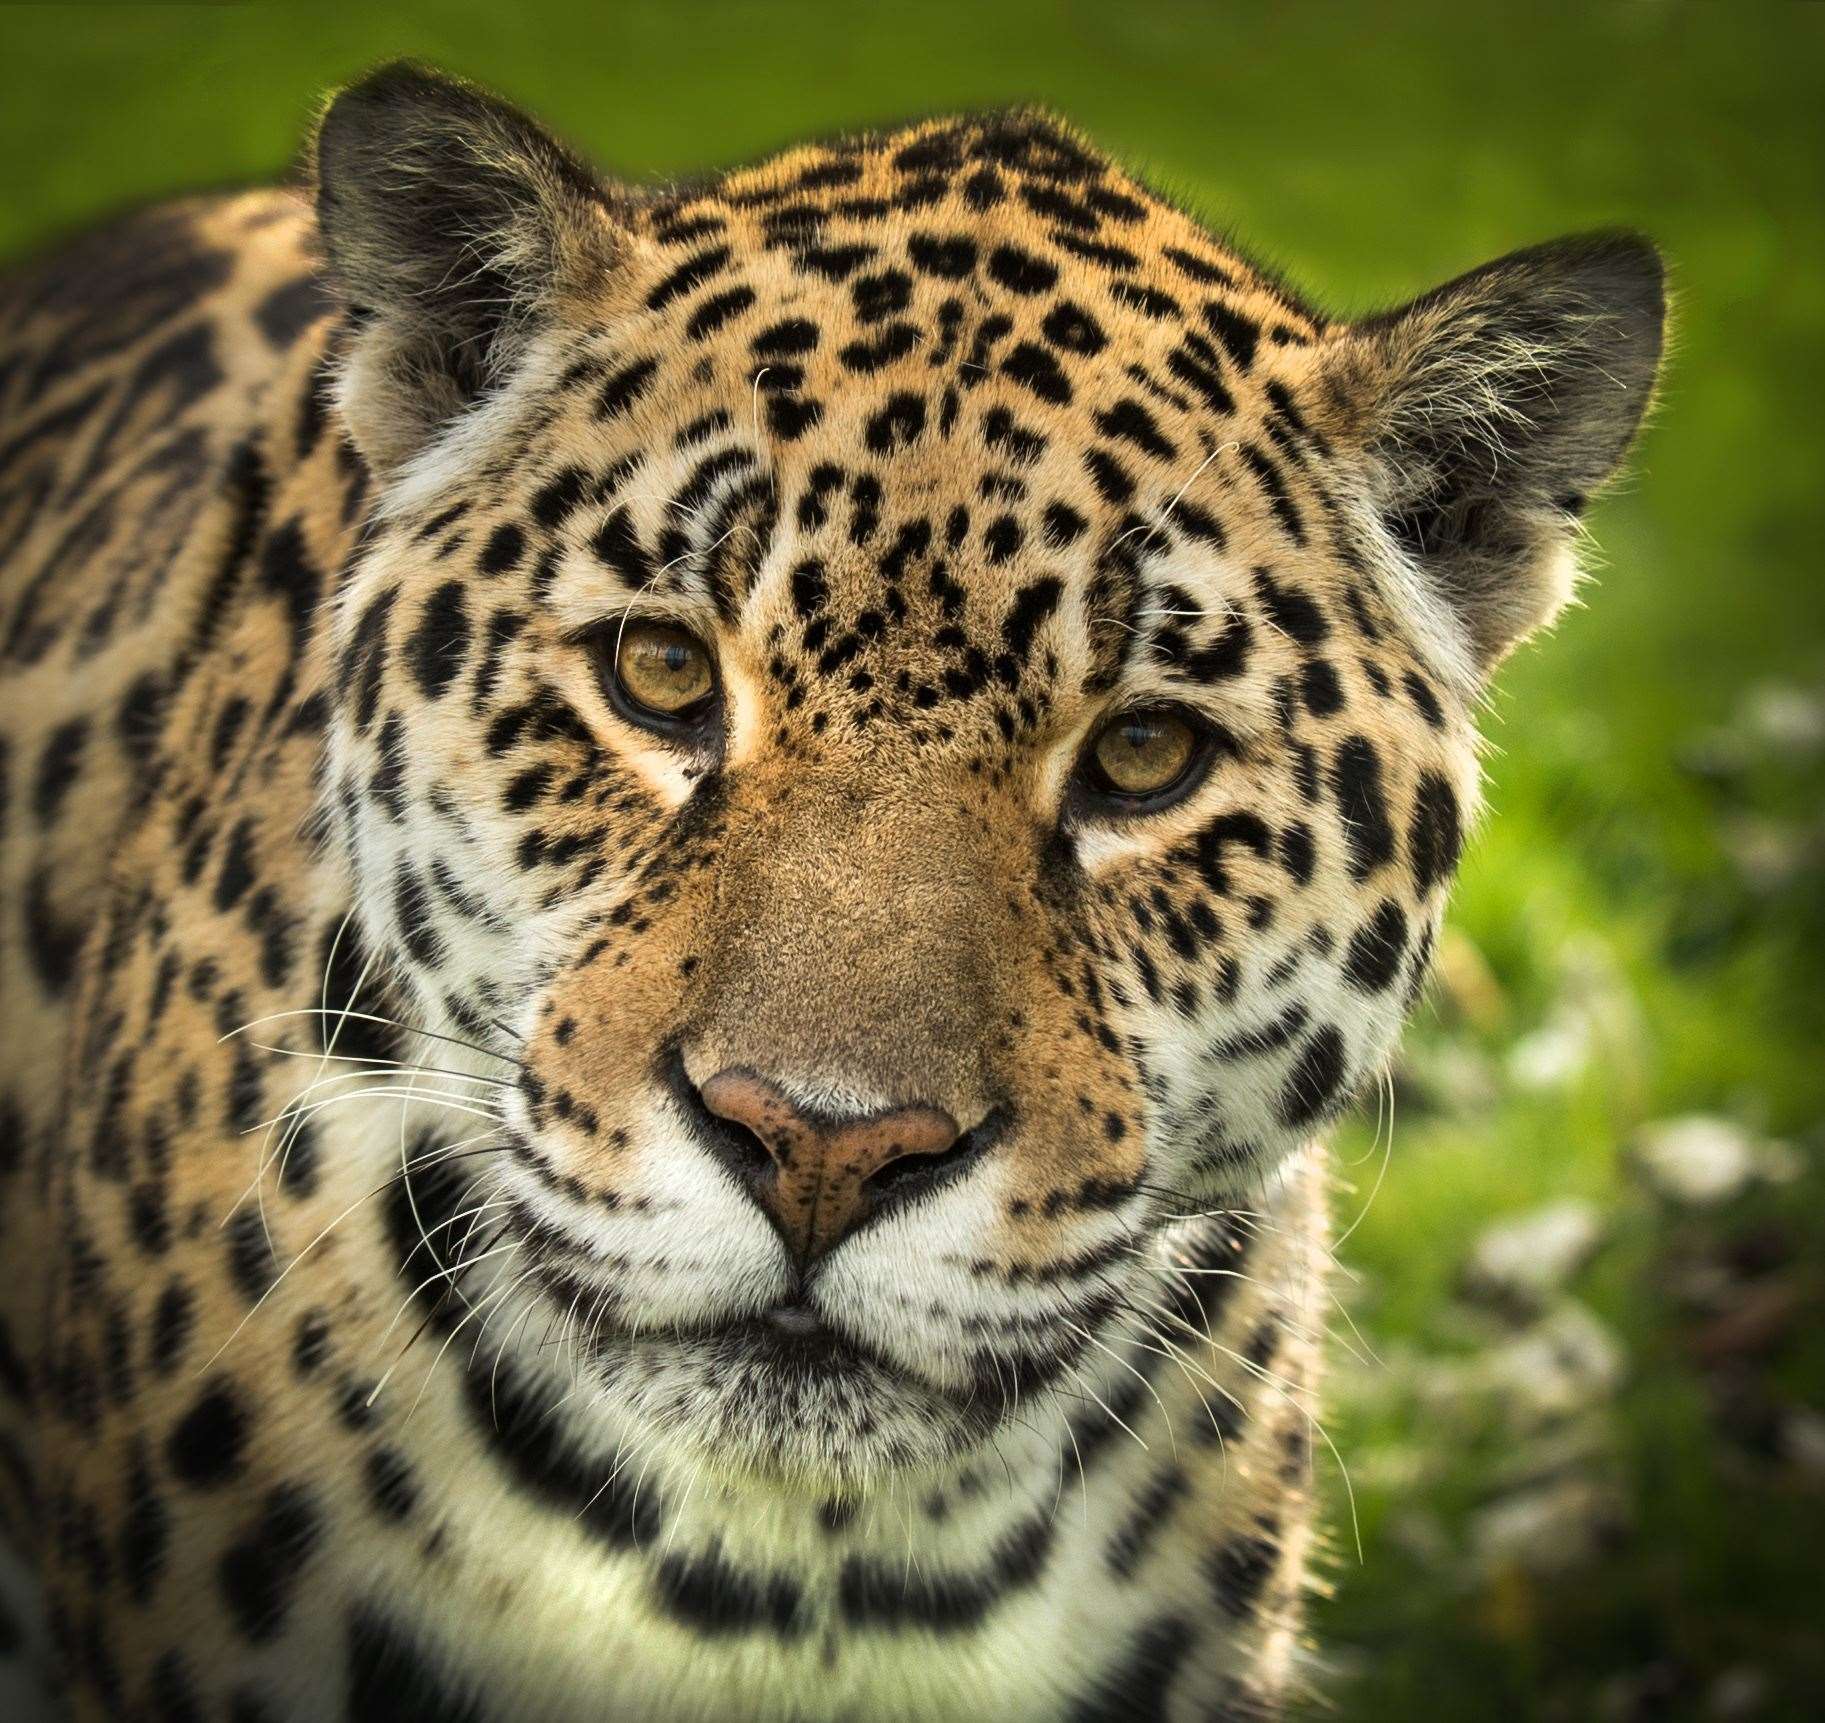 Jaguar Sofia from the Big Cat Sanctuary has passed away